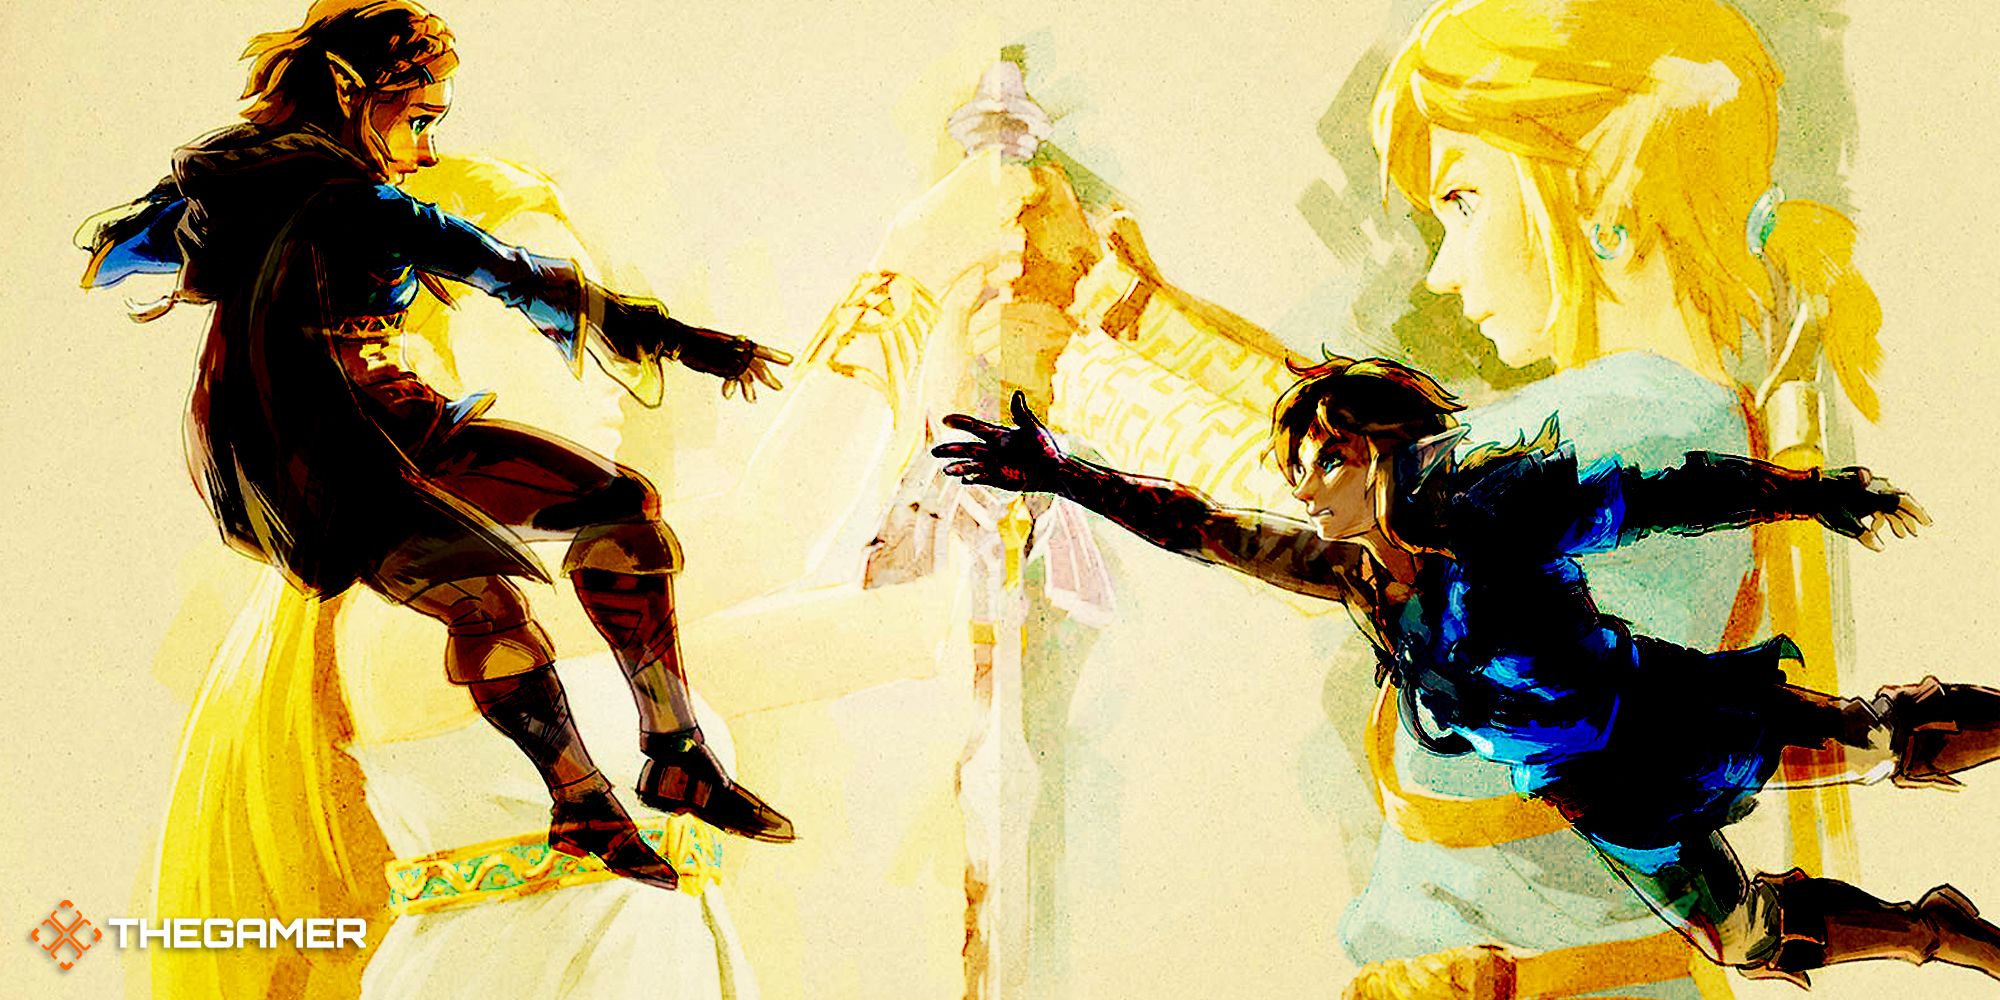 Zelda: Tears Of The Kingdom: Where Does It Fit In The Zelda Timeline?